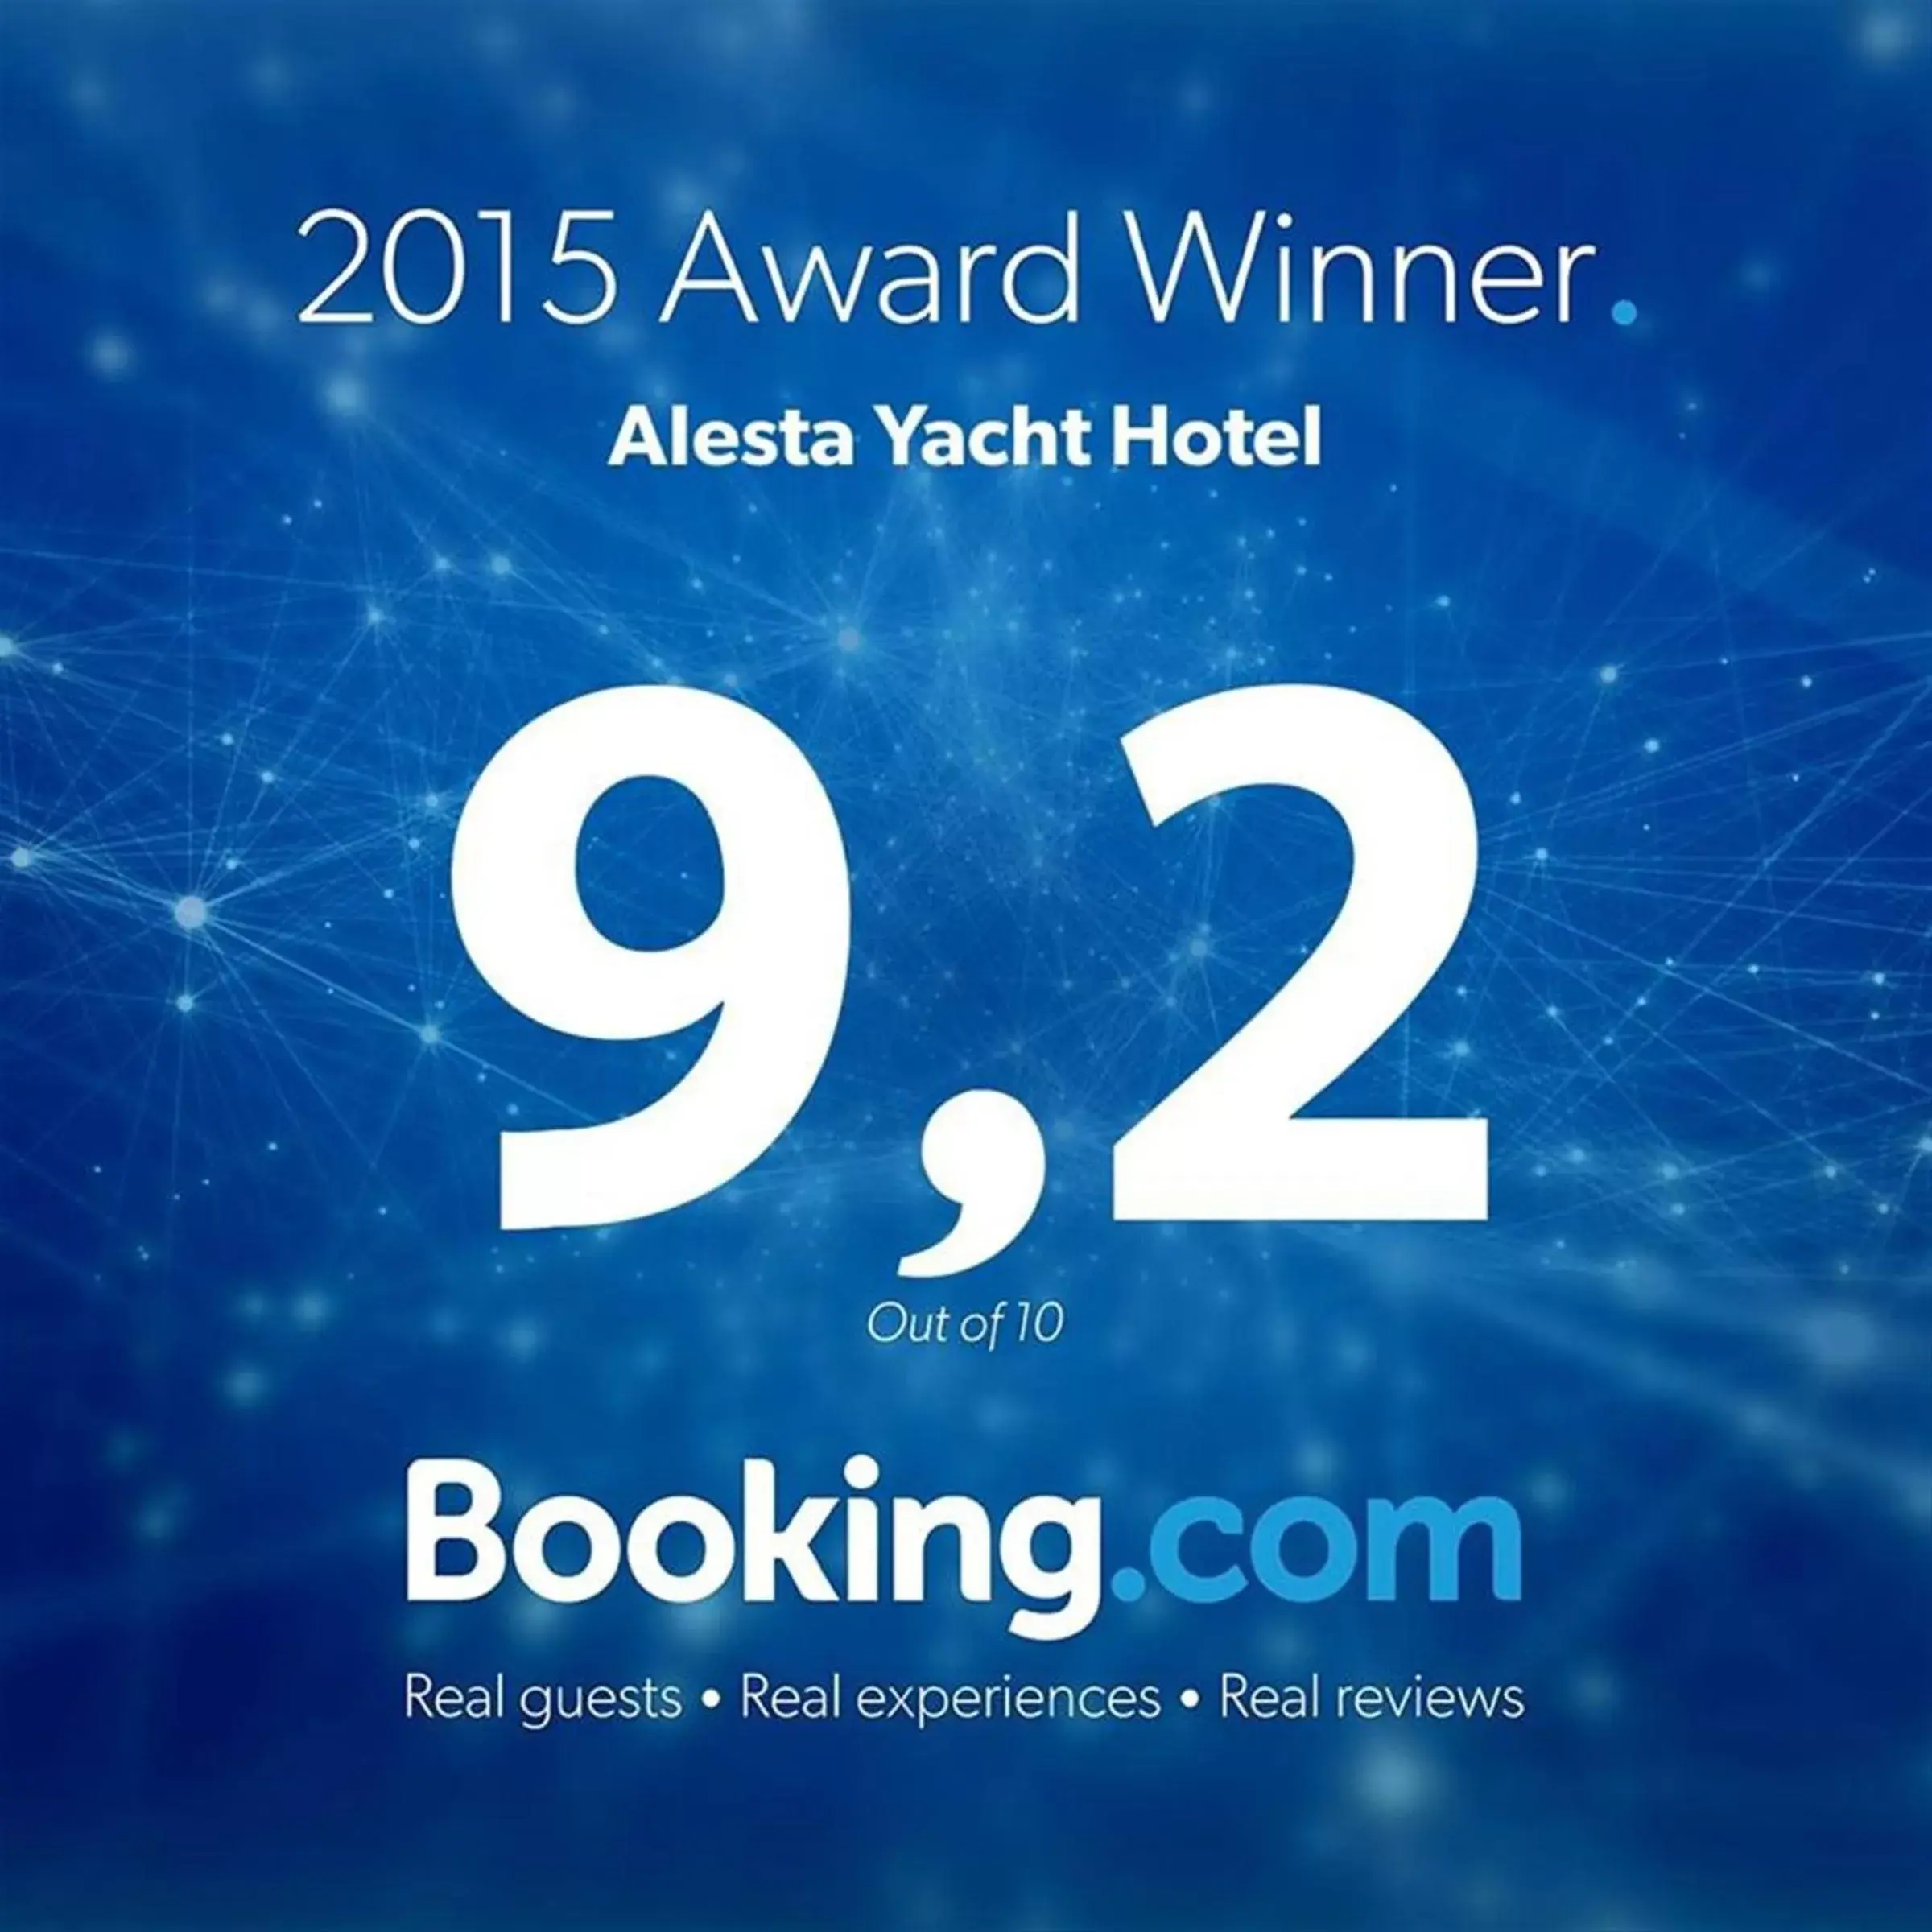 Certificate/Award in Alesta Yacht Hotel